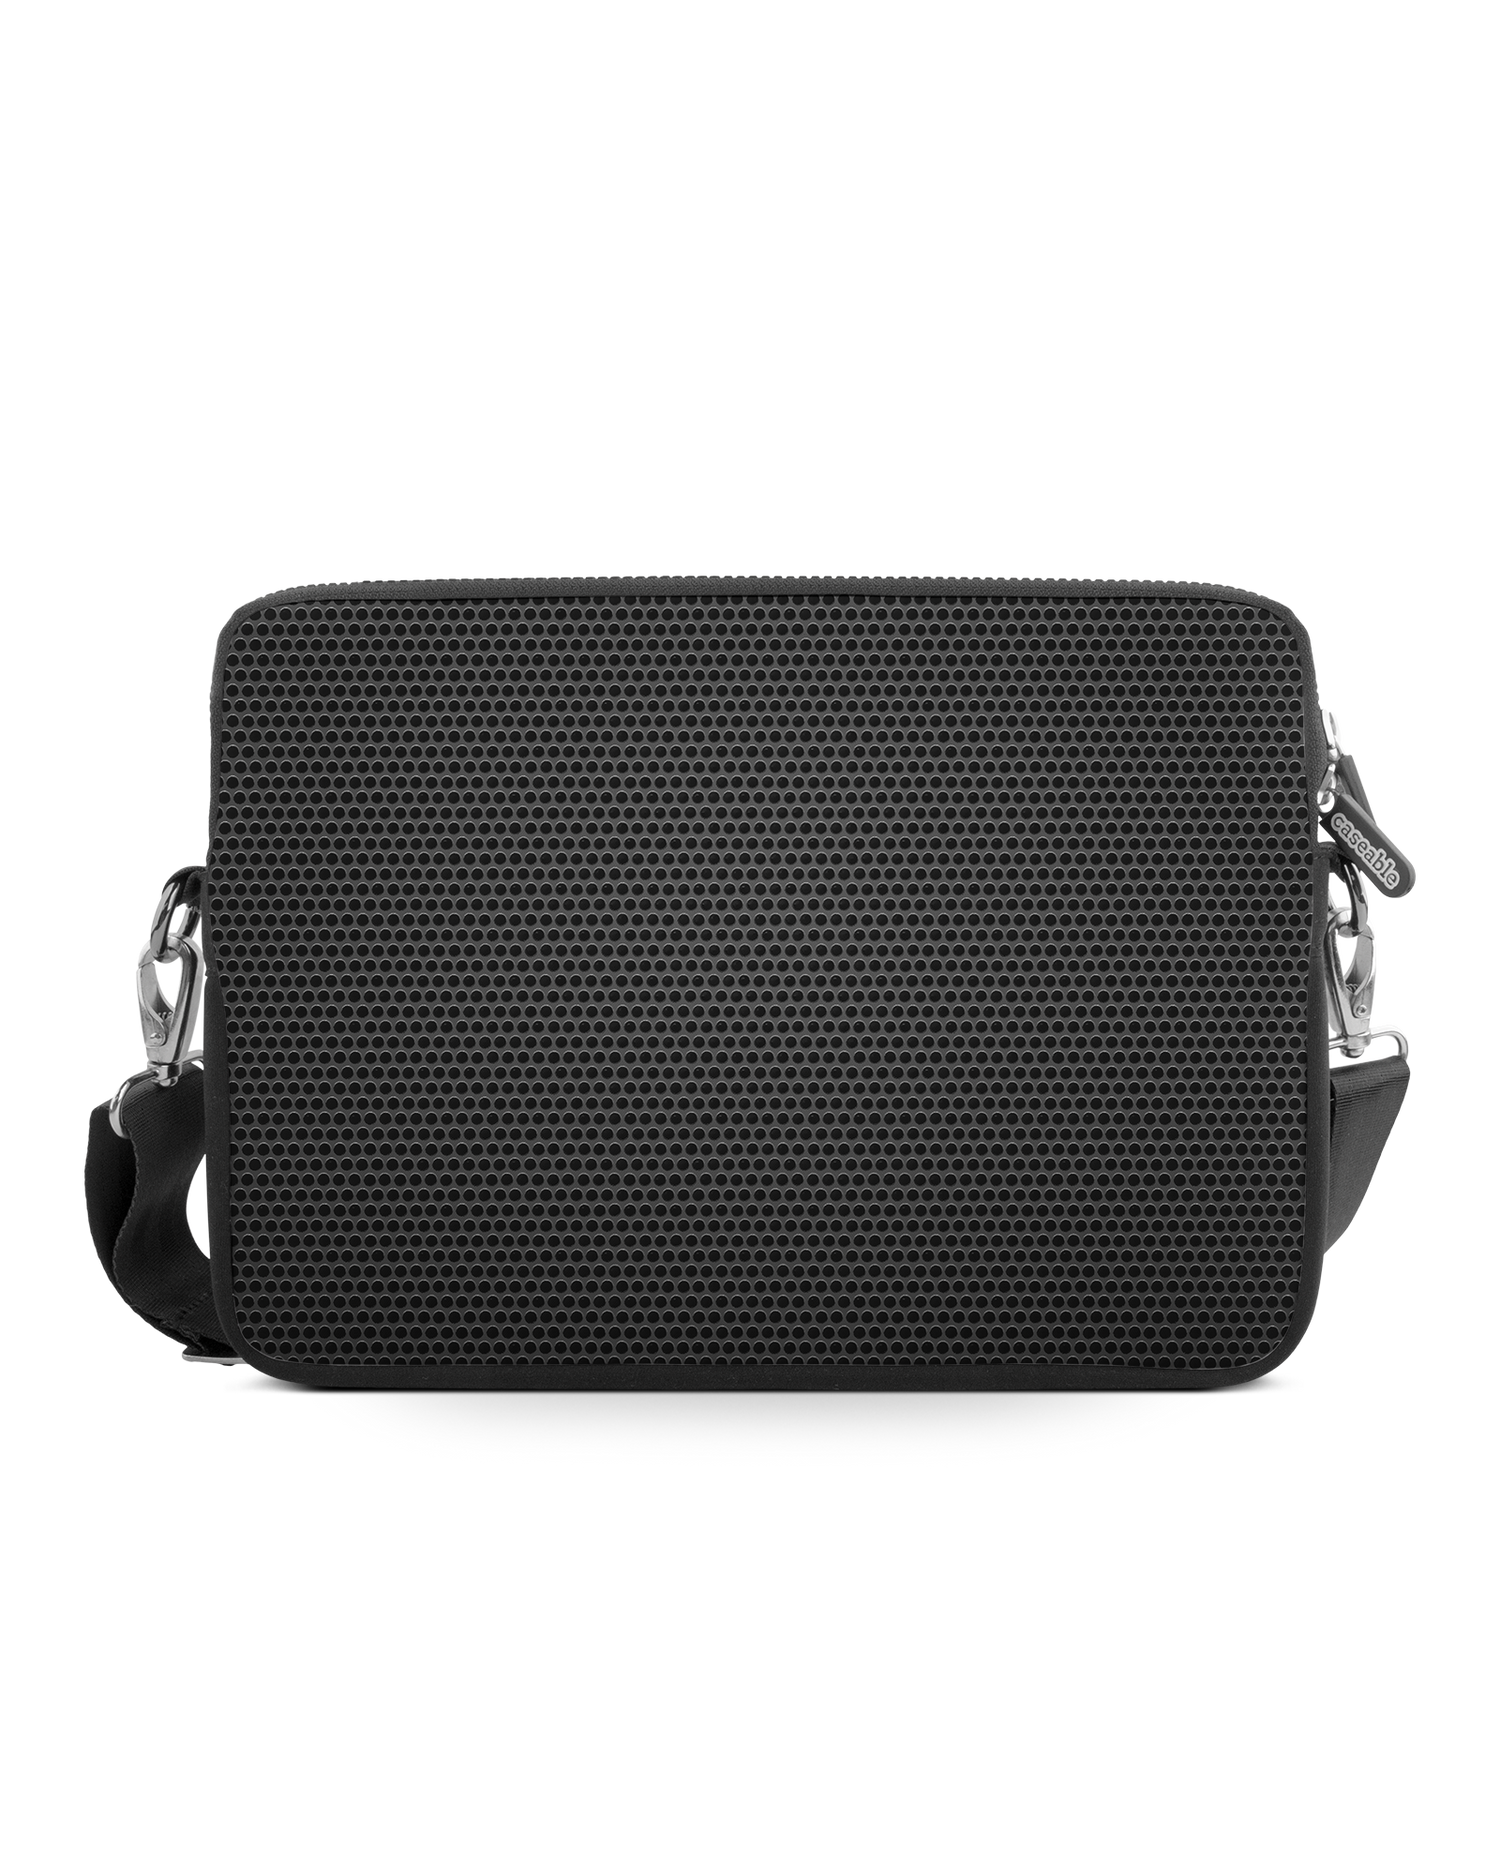 Carbon II Premium Laptop Bag 13 inch: Front View